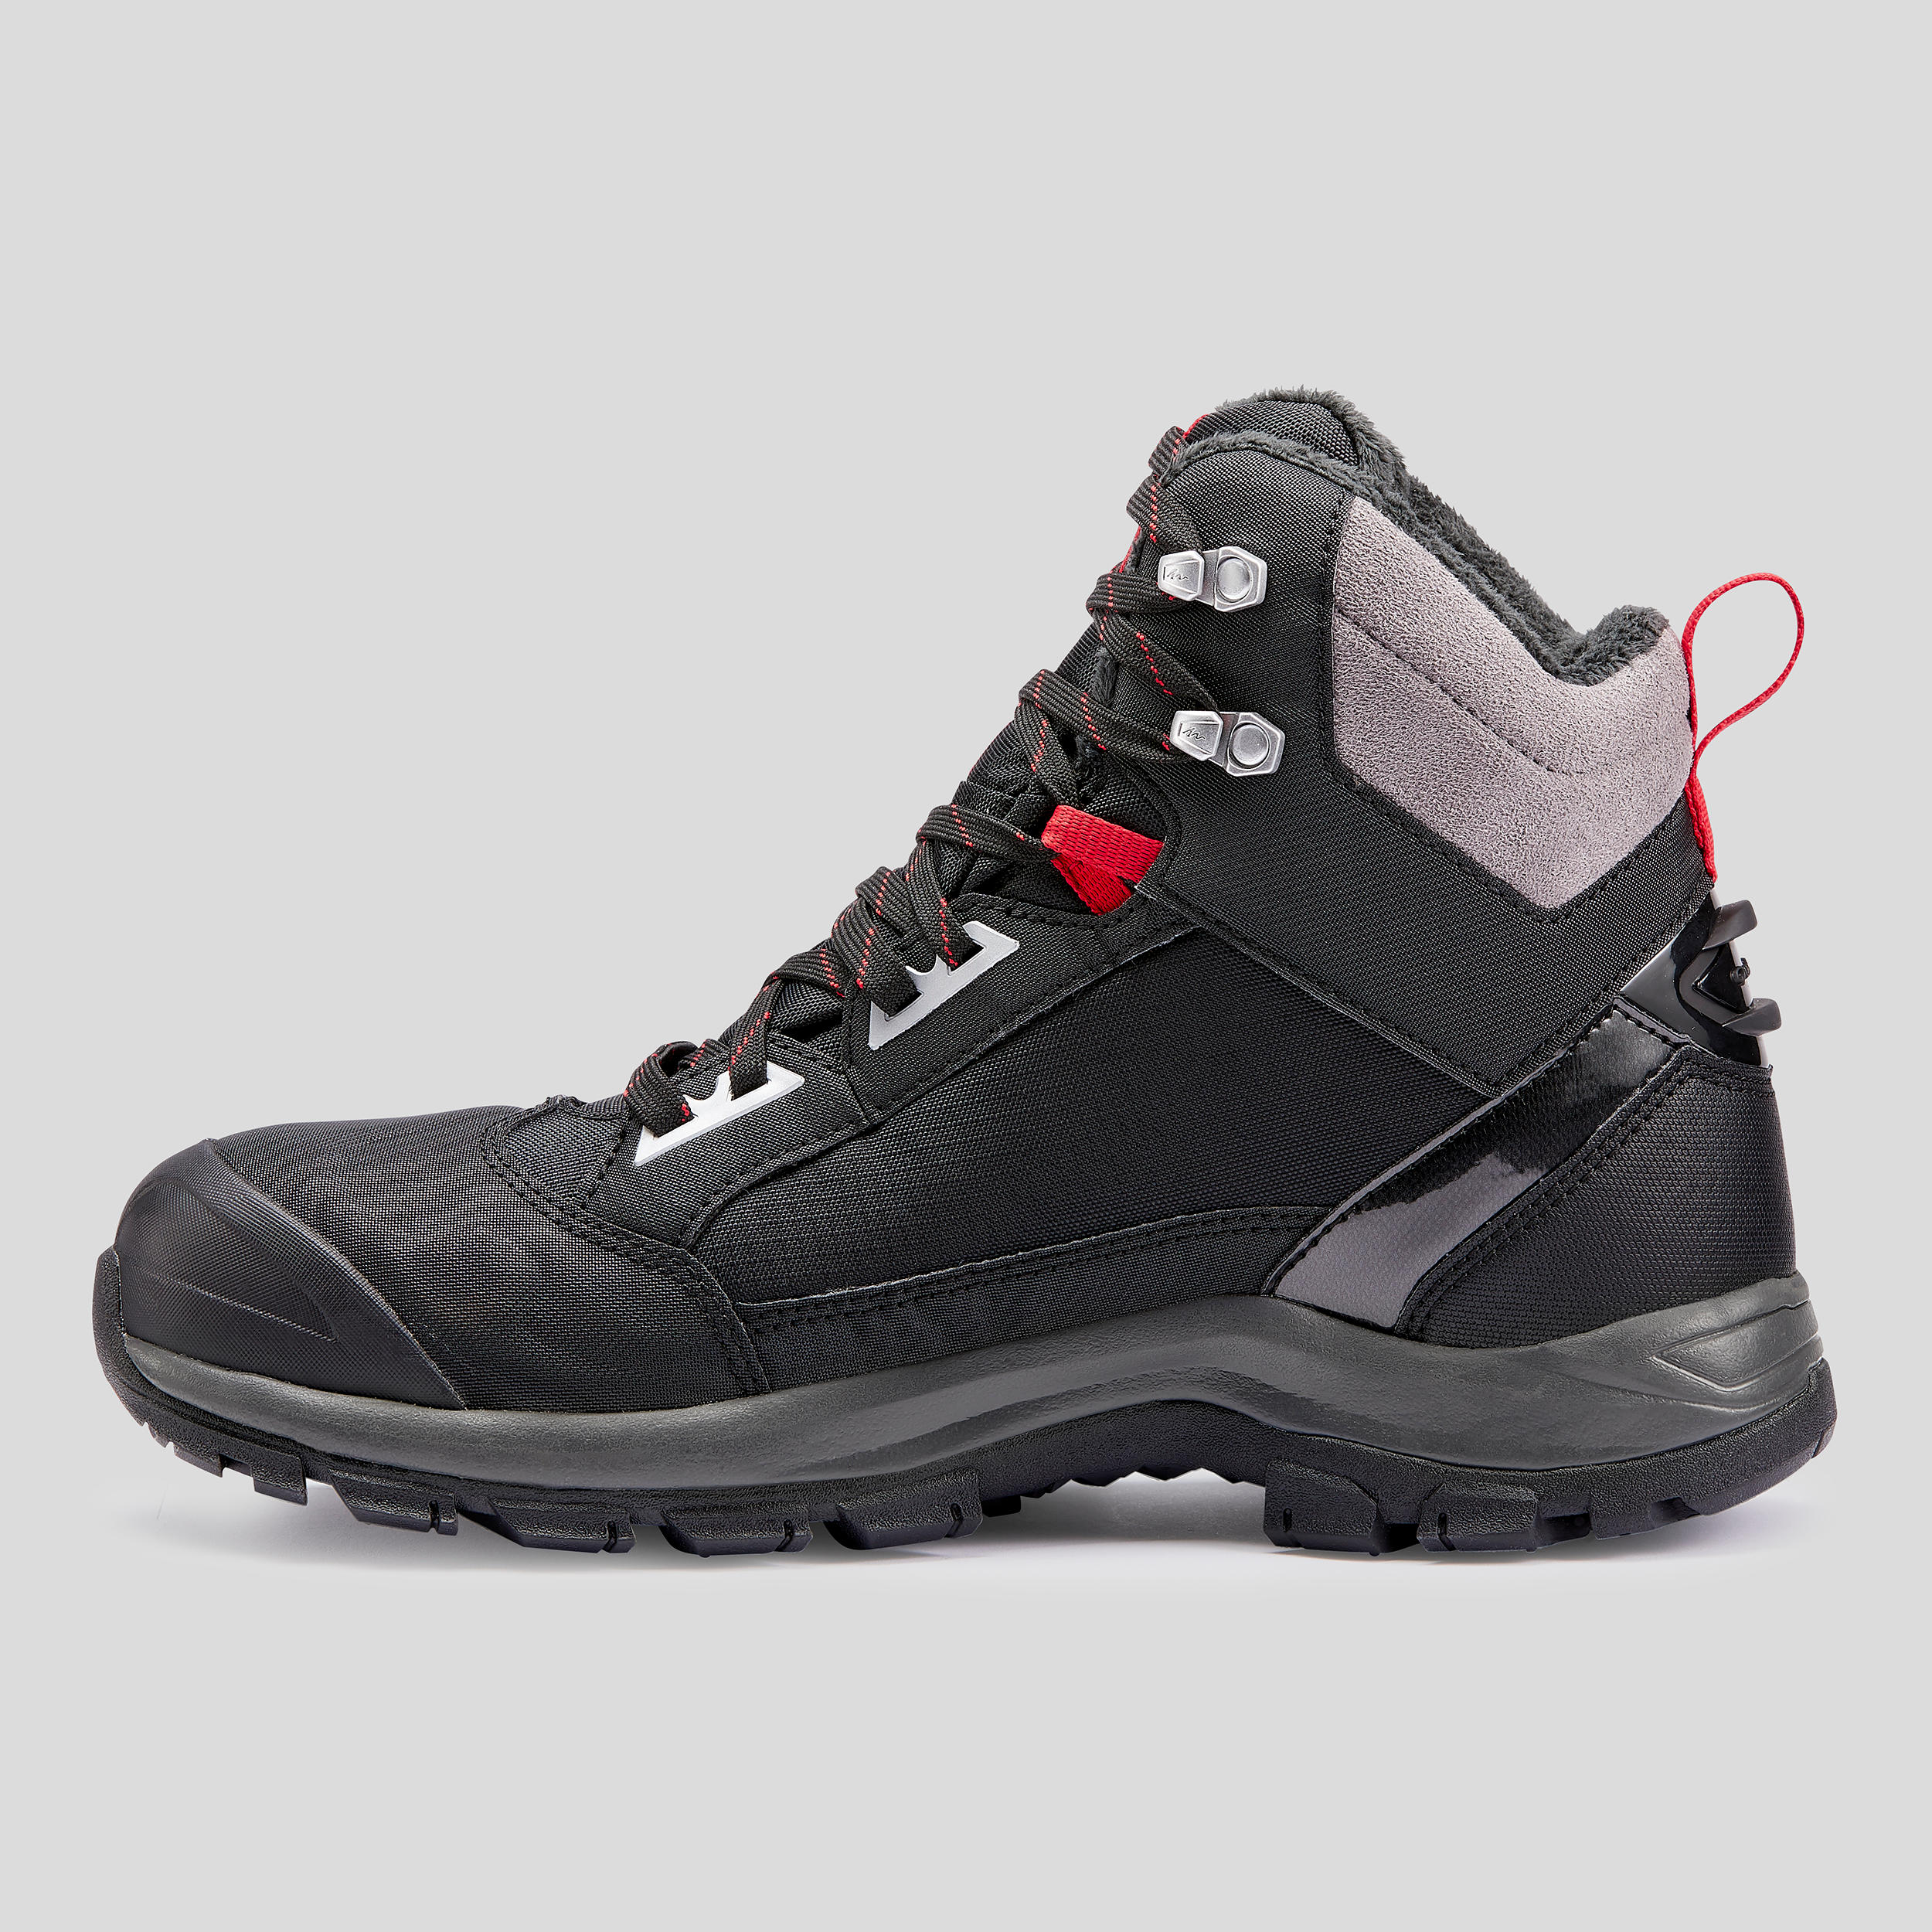 SH520 X-WARM Insulated Boots – Men 